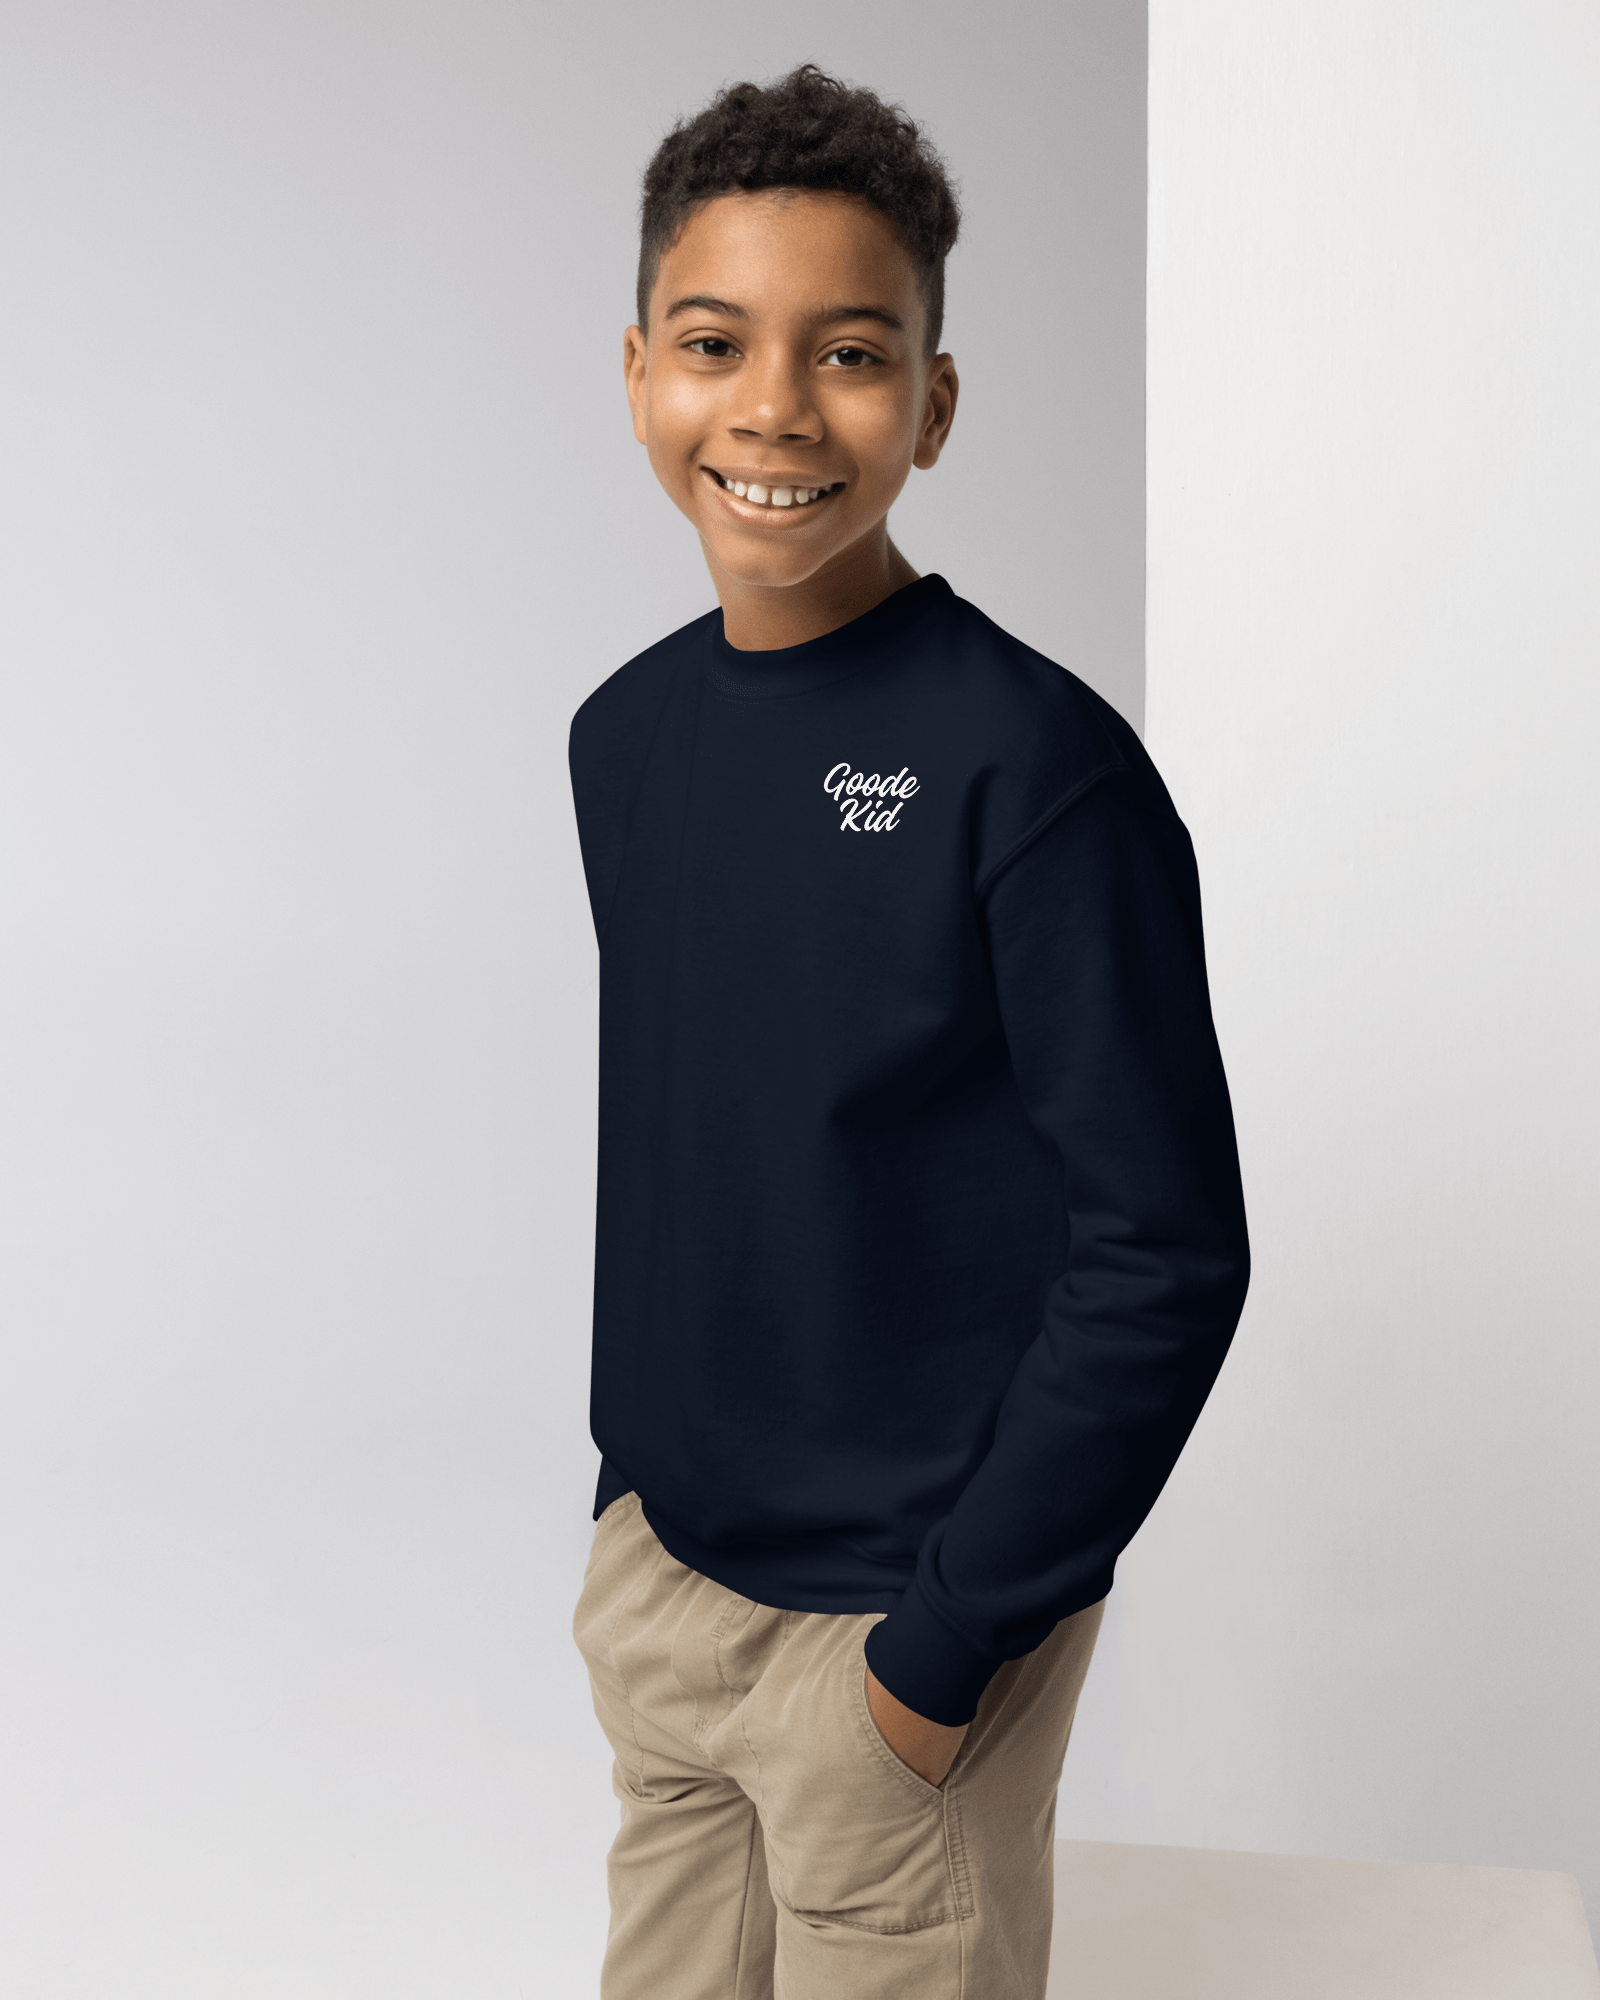 Goode Kid Sweatshirt Jumper | Youth kids sweatshirts Jolly & Goode